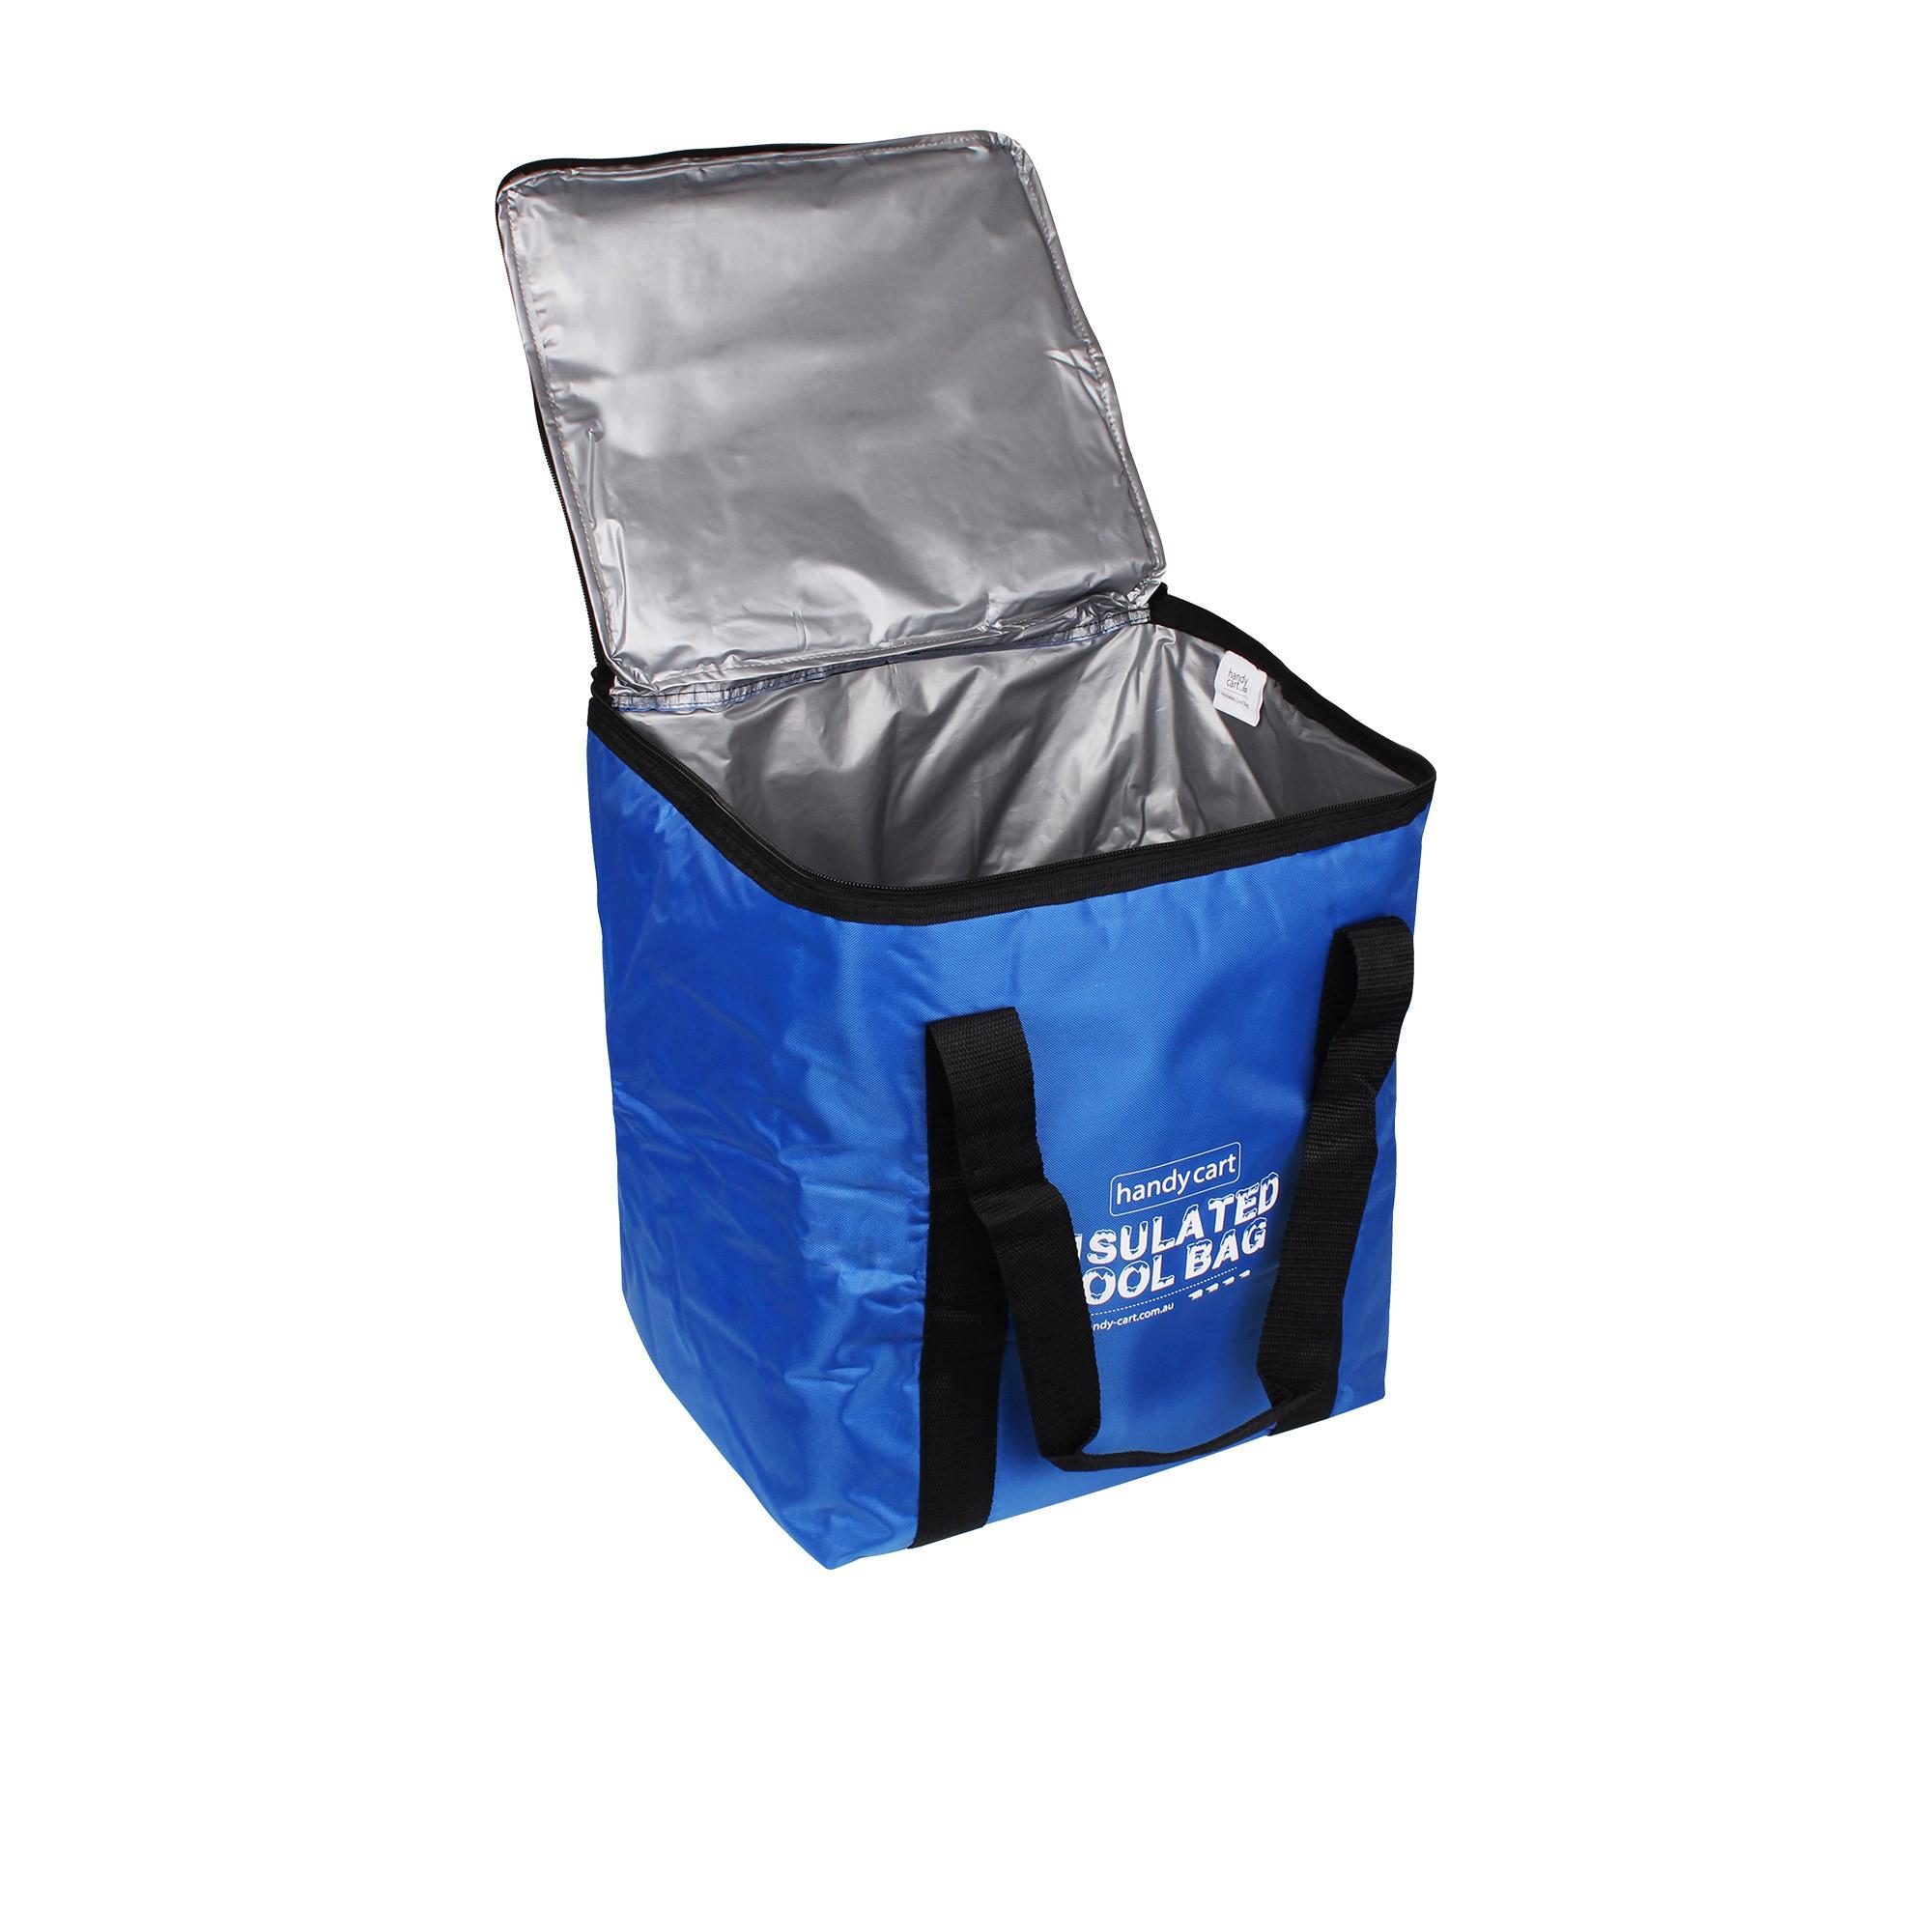 White Magic Handy Cart Insulated Cool Bag Jumbo Image 3